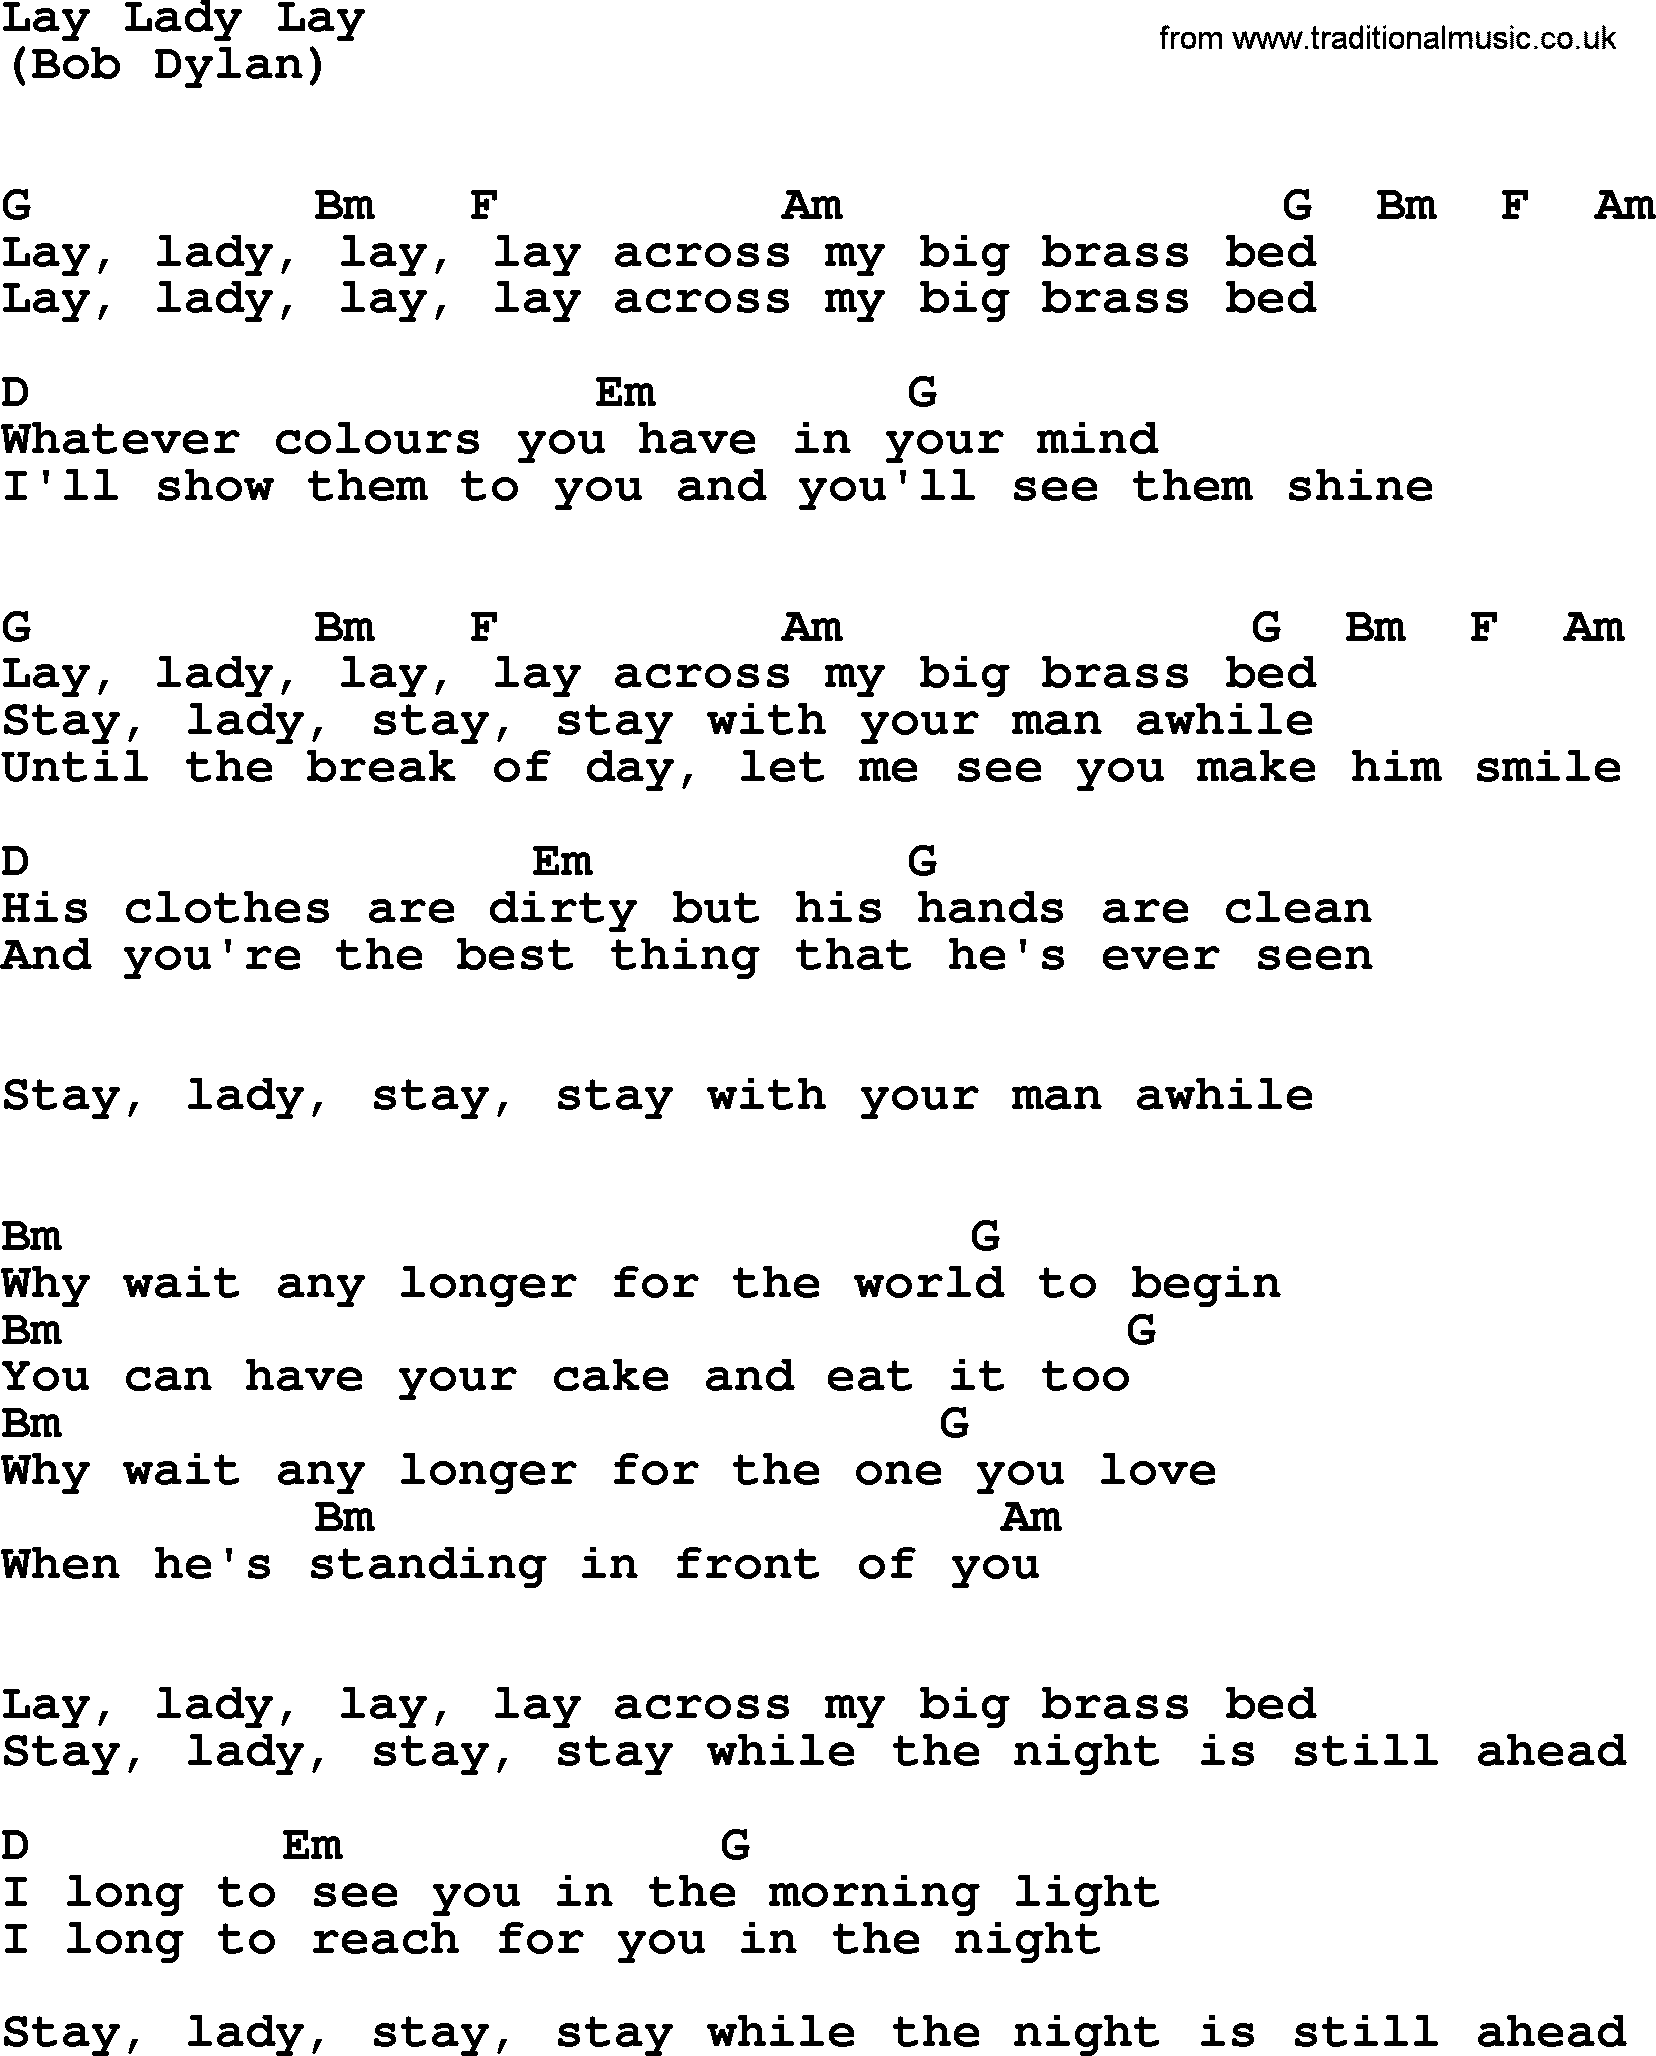 The Byrds song Lay Lady Lay, lyrics and chords